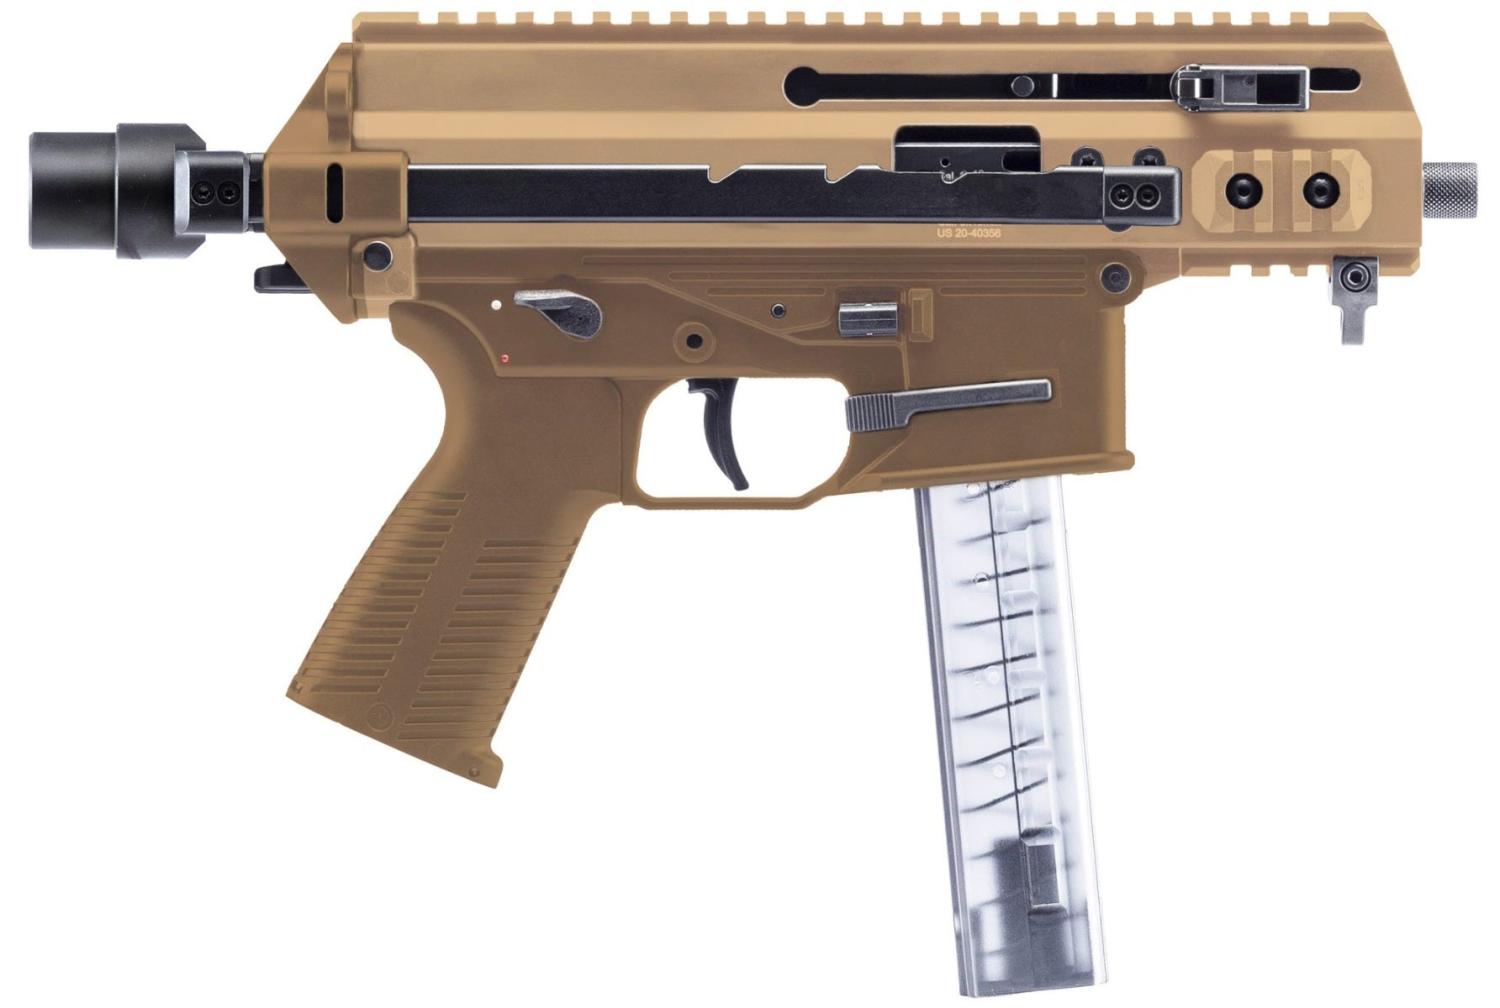 B&T APC9K Pro Coyote Tan 9mm 4.3" Barrel 30-Rounds Telescopic Brace Adapter - $2775.99 ($9.99 S/H on Firearms)